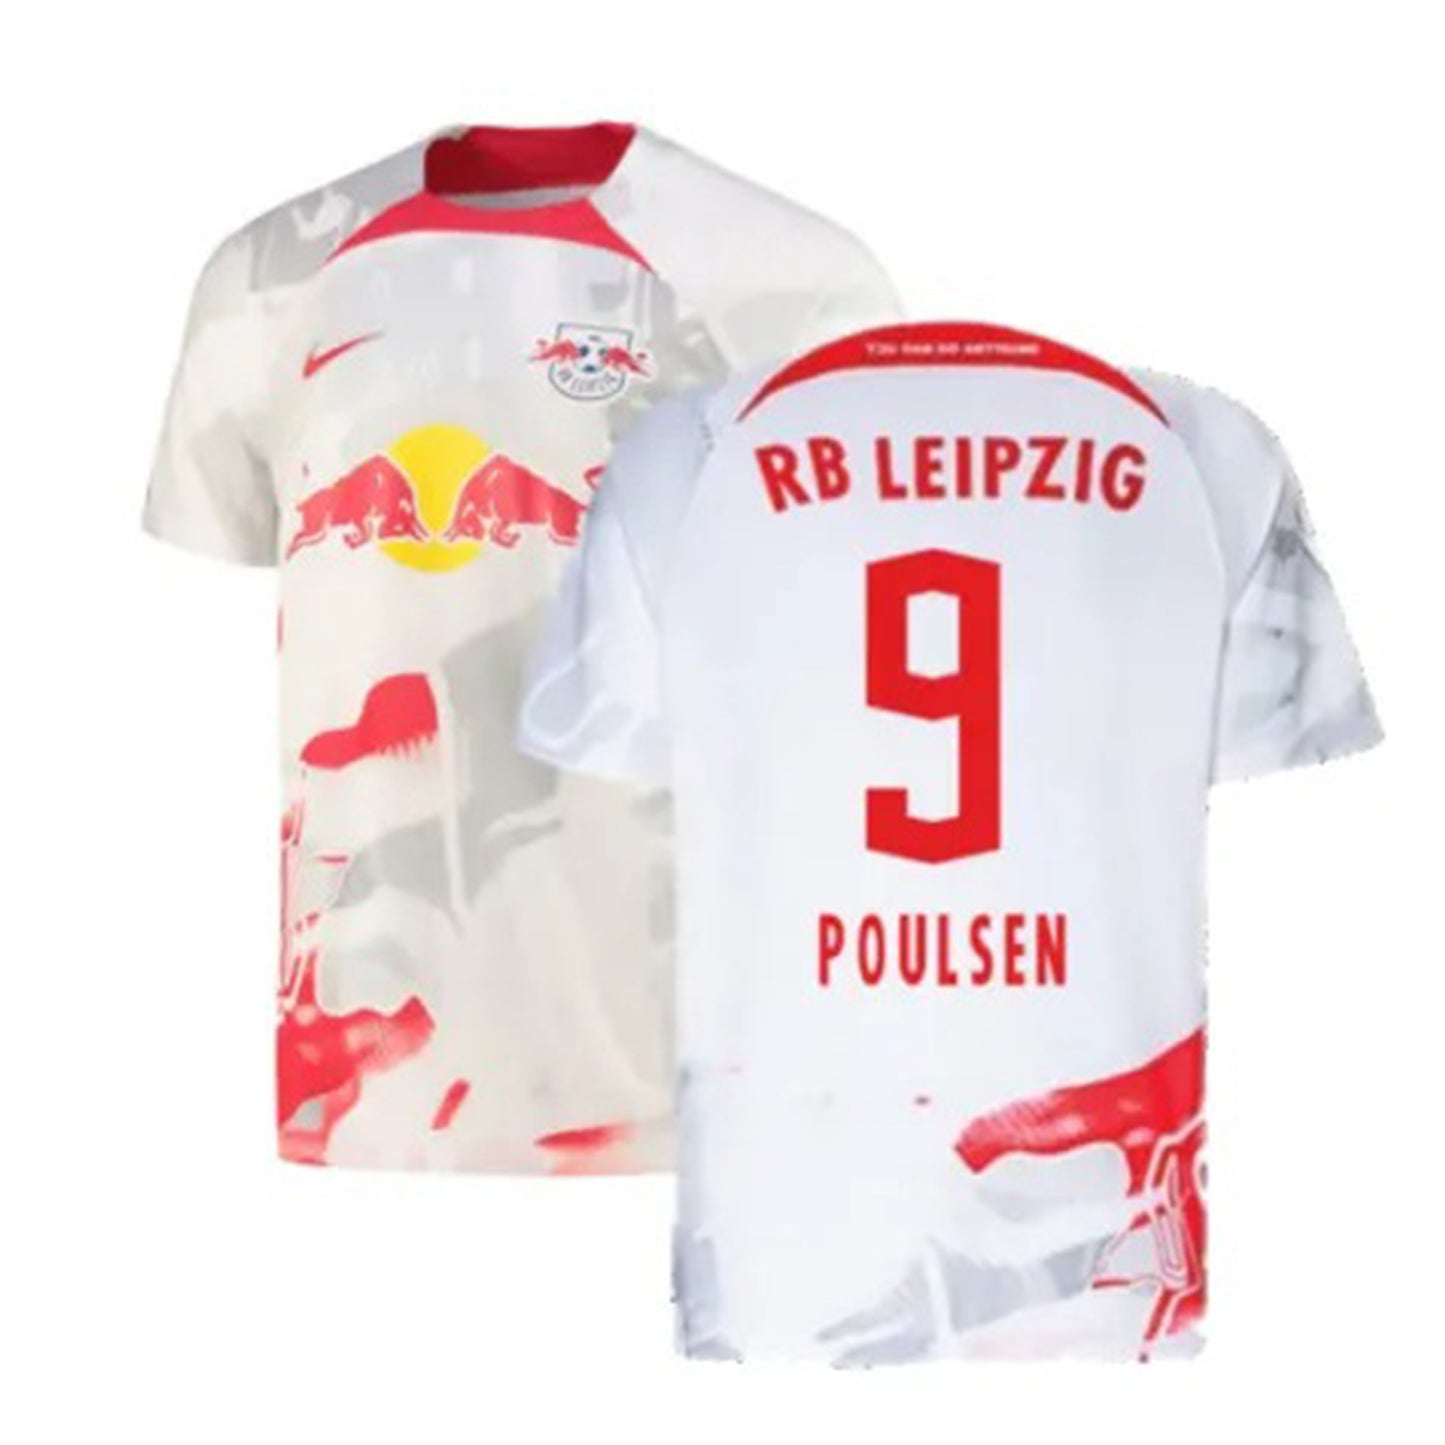 Yussuf Poulsen RB Leipzig 9 Jersey